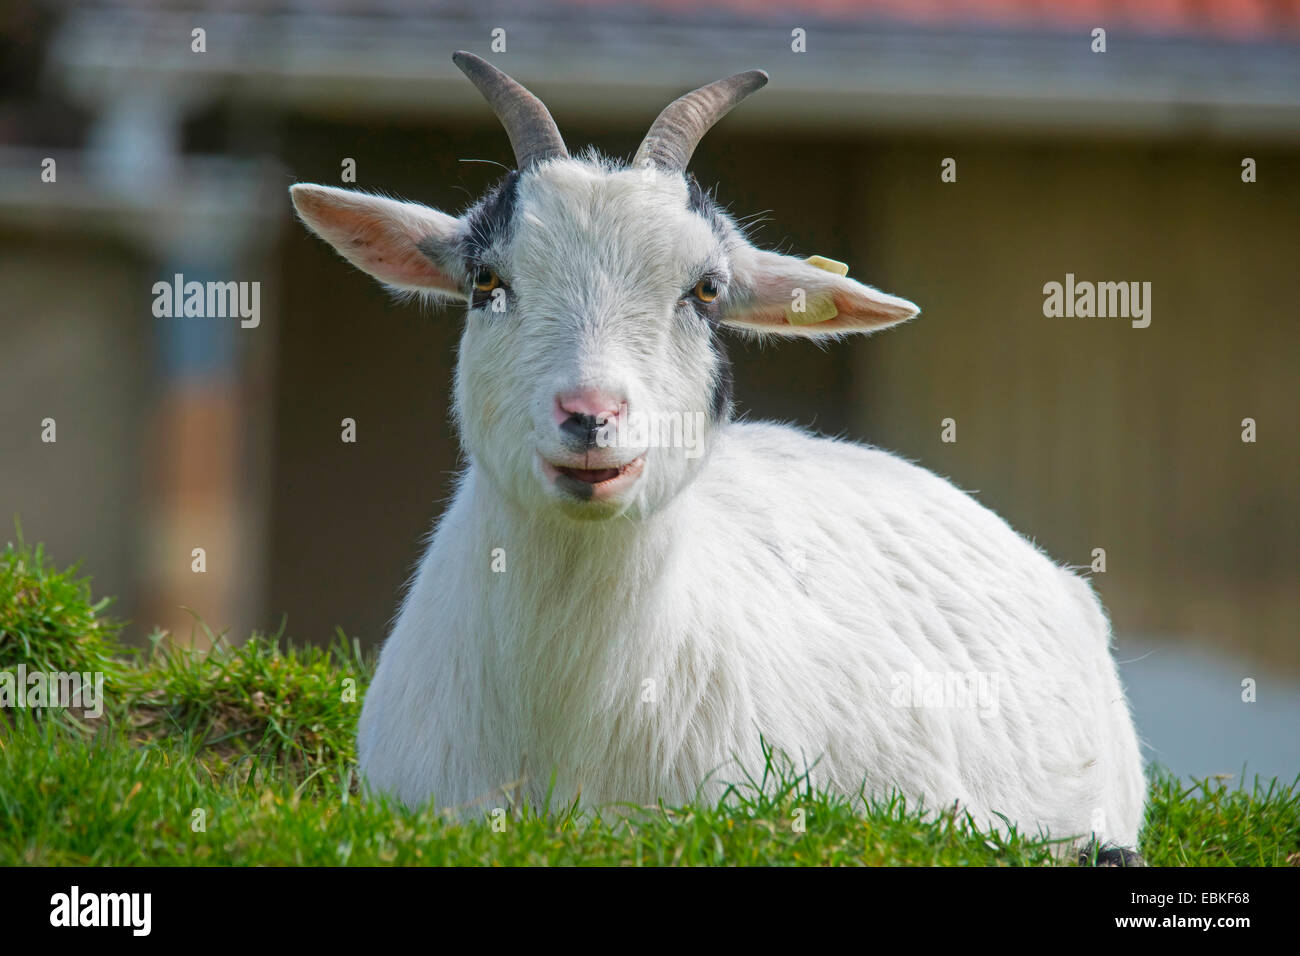 domestic goat (Capra hircus, Capra aegagrus f. hircus), white animal with black spots sitting on a lawn, Germany, North Rhine-Westphalia Stock Photo